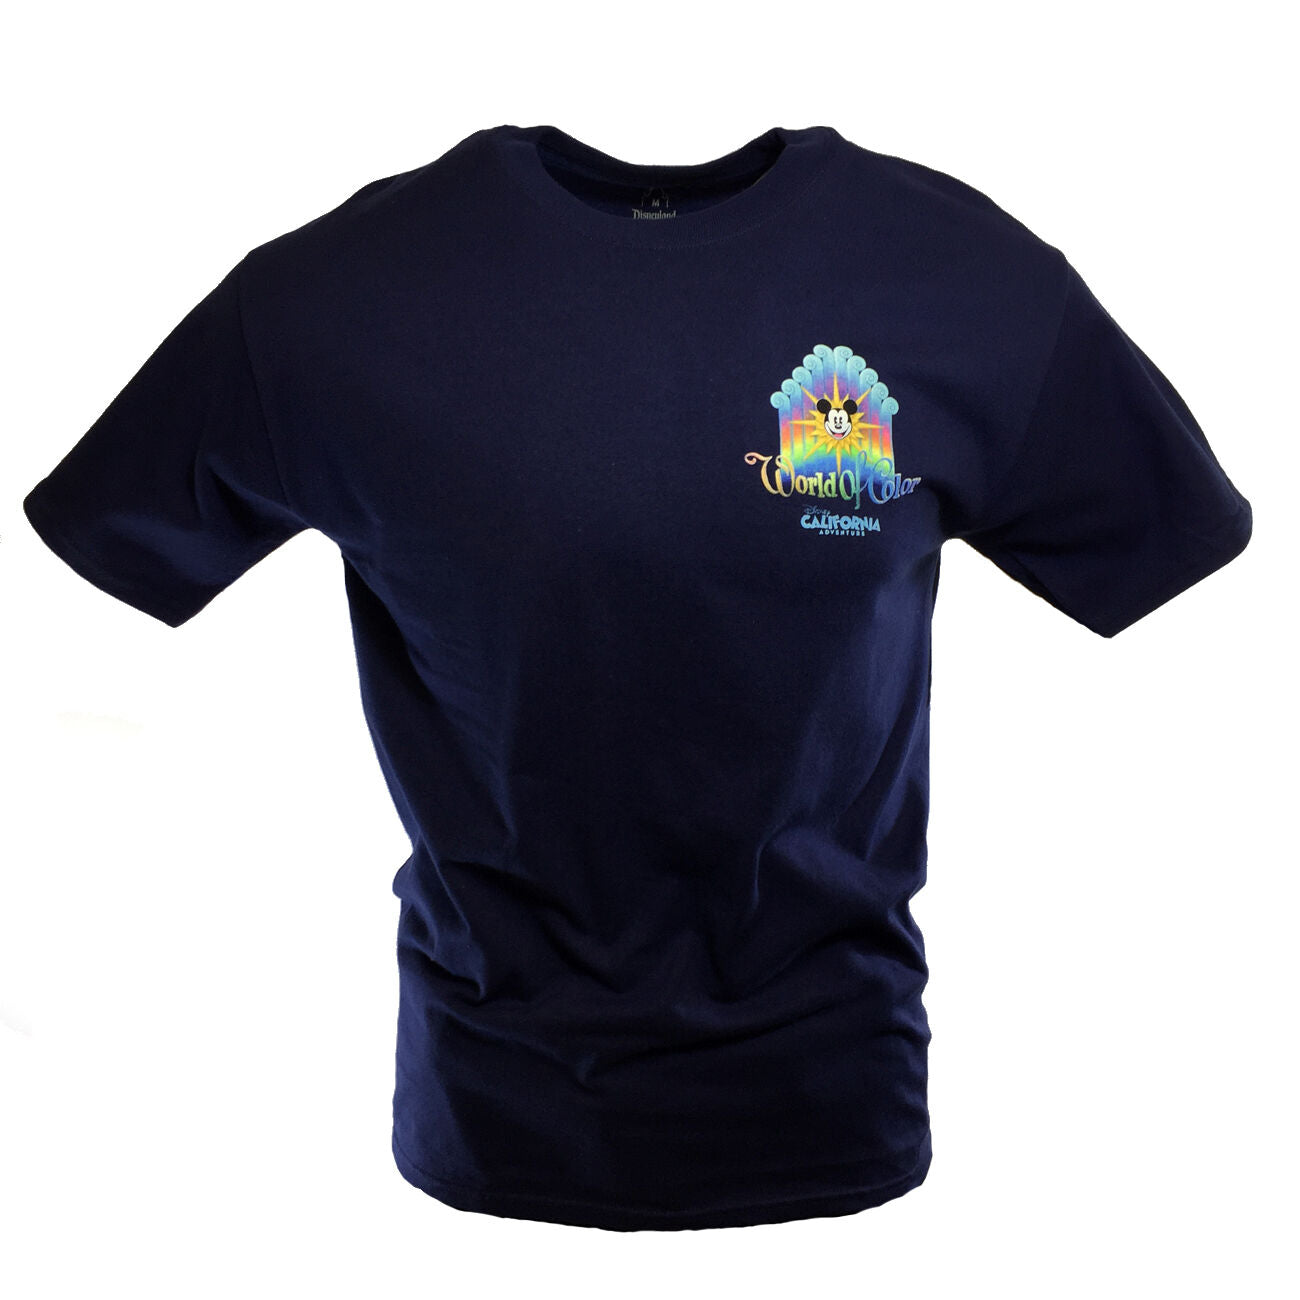 Disney World of Color T-Shirt - Navy Blue Mens/Unisex